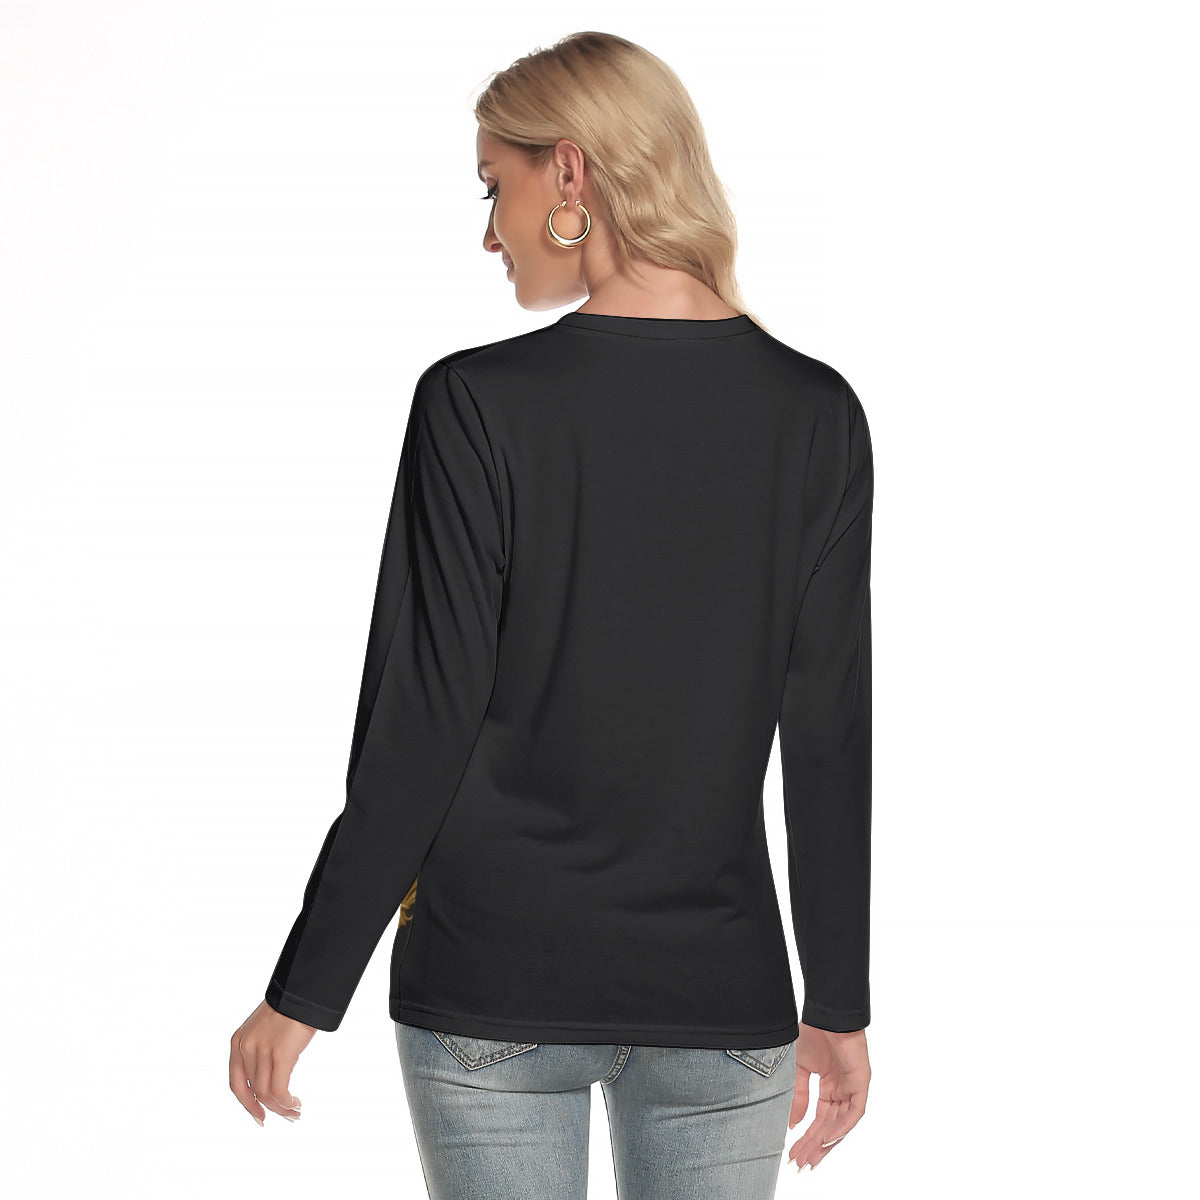 Fantacy Fleur -- Women's O-neck Long Sleeve T-shirt